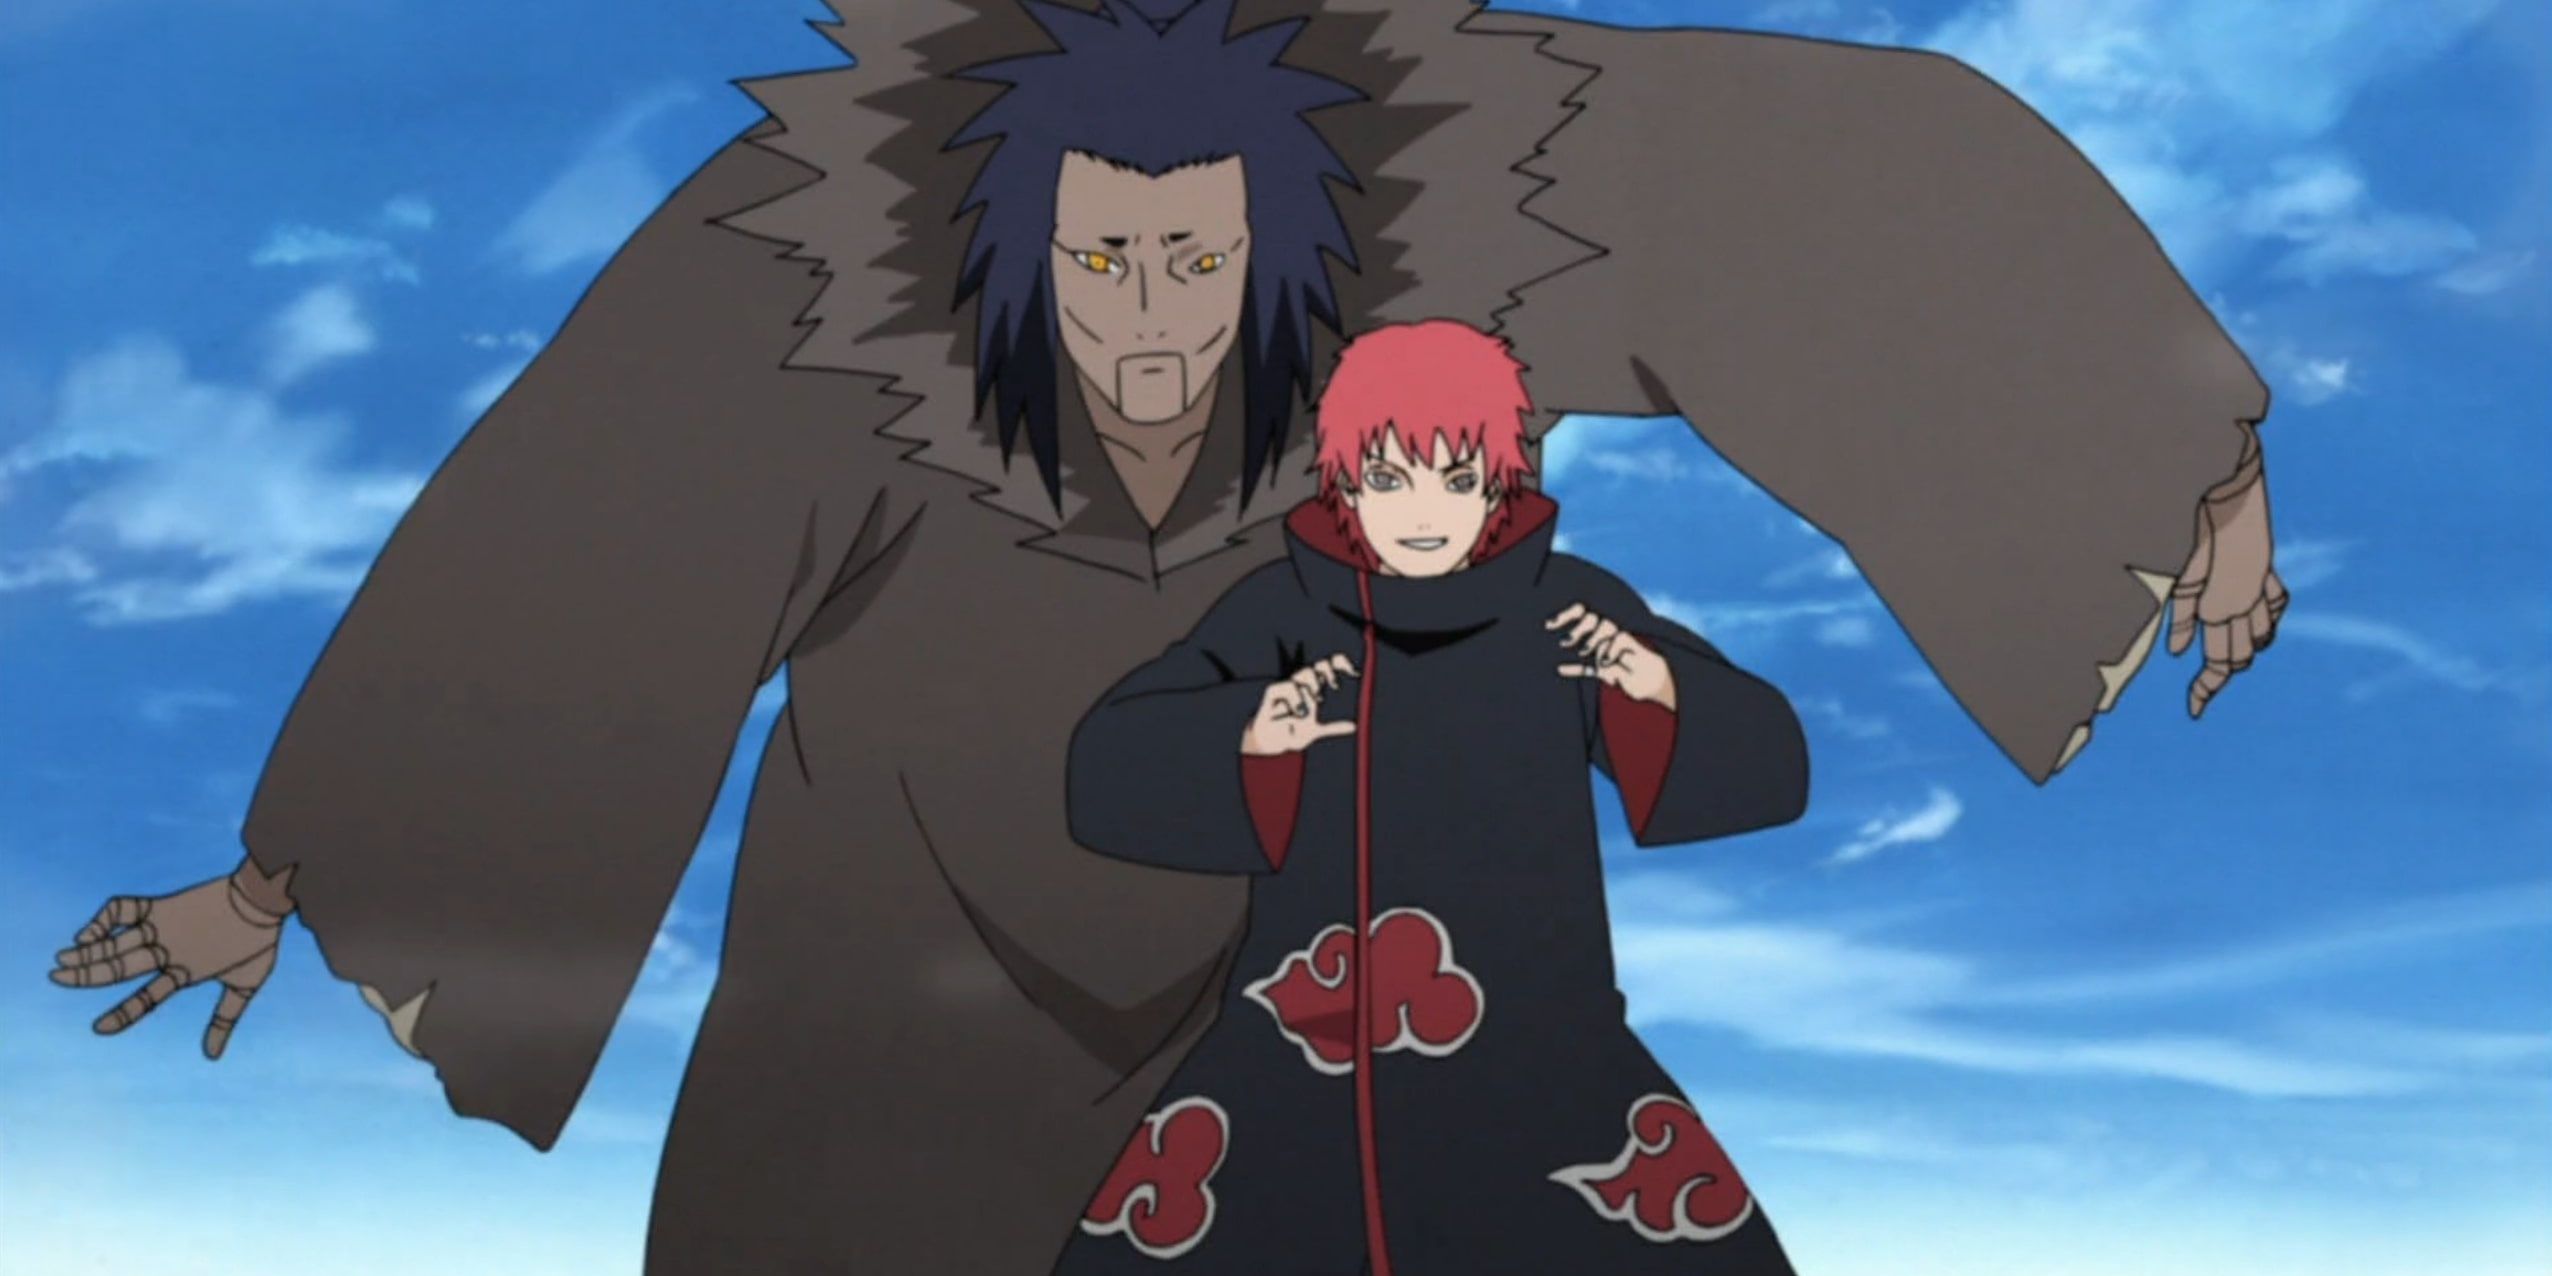 Sasori Third Kazekage puppet in Naruto.